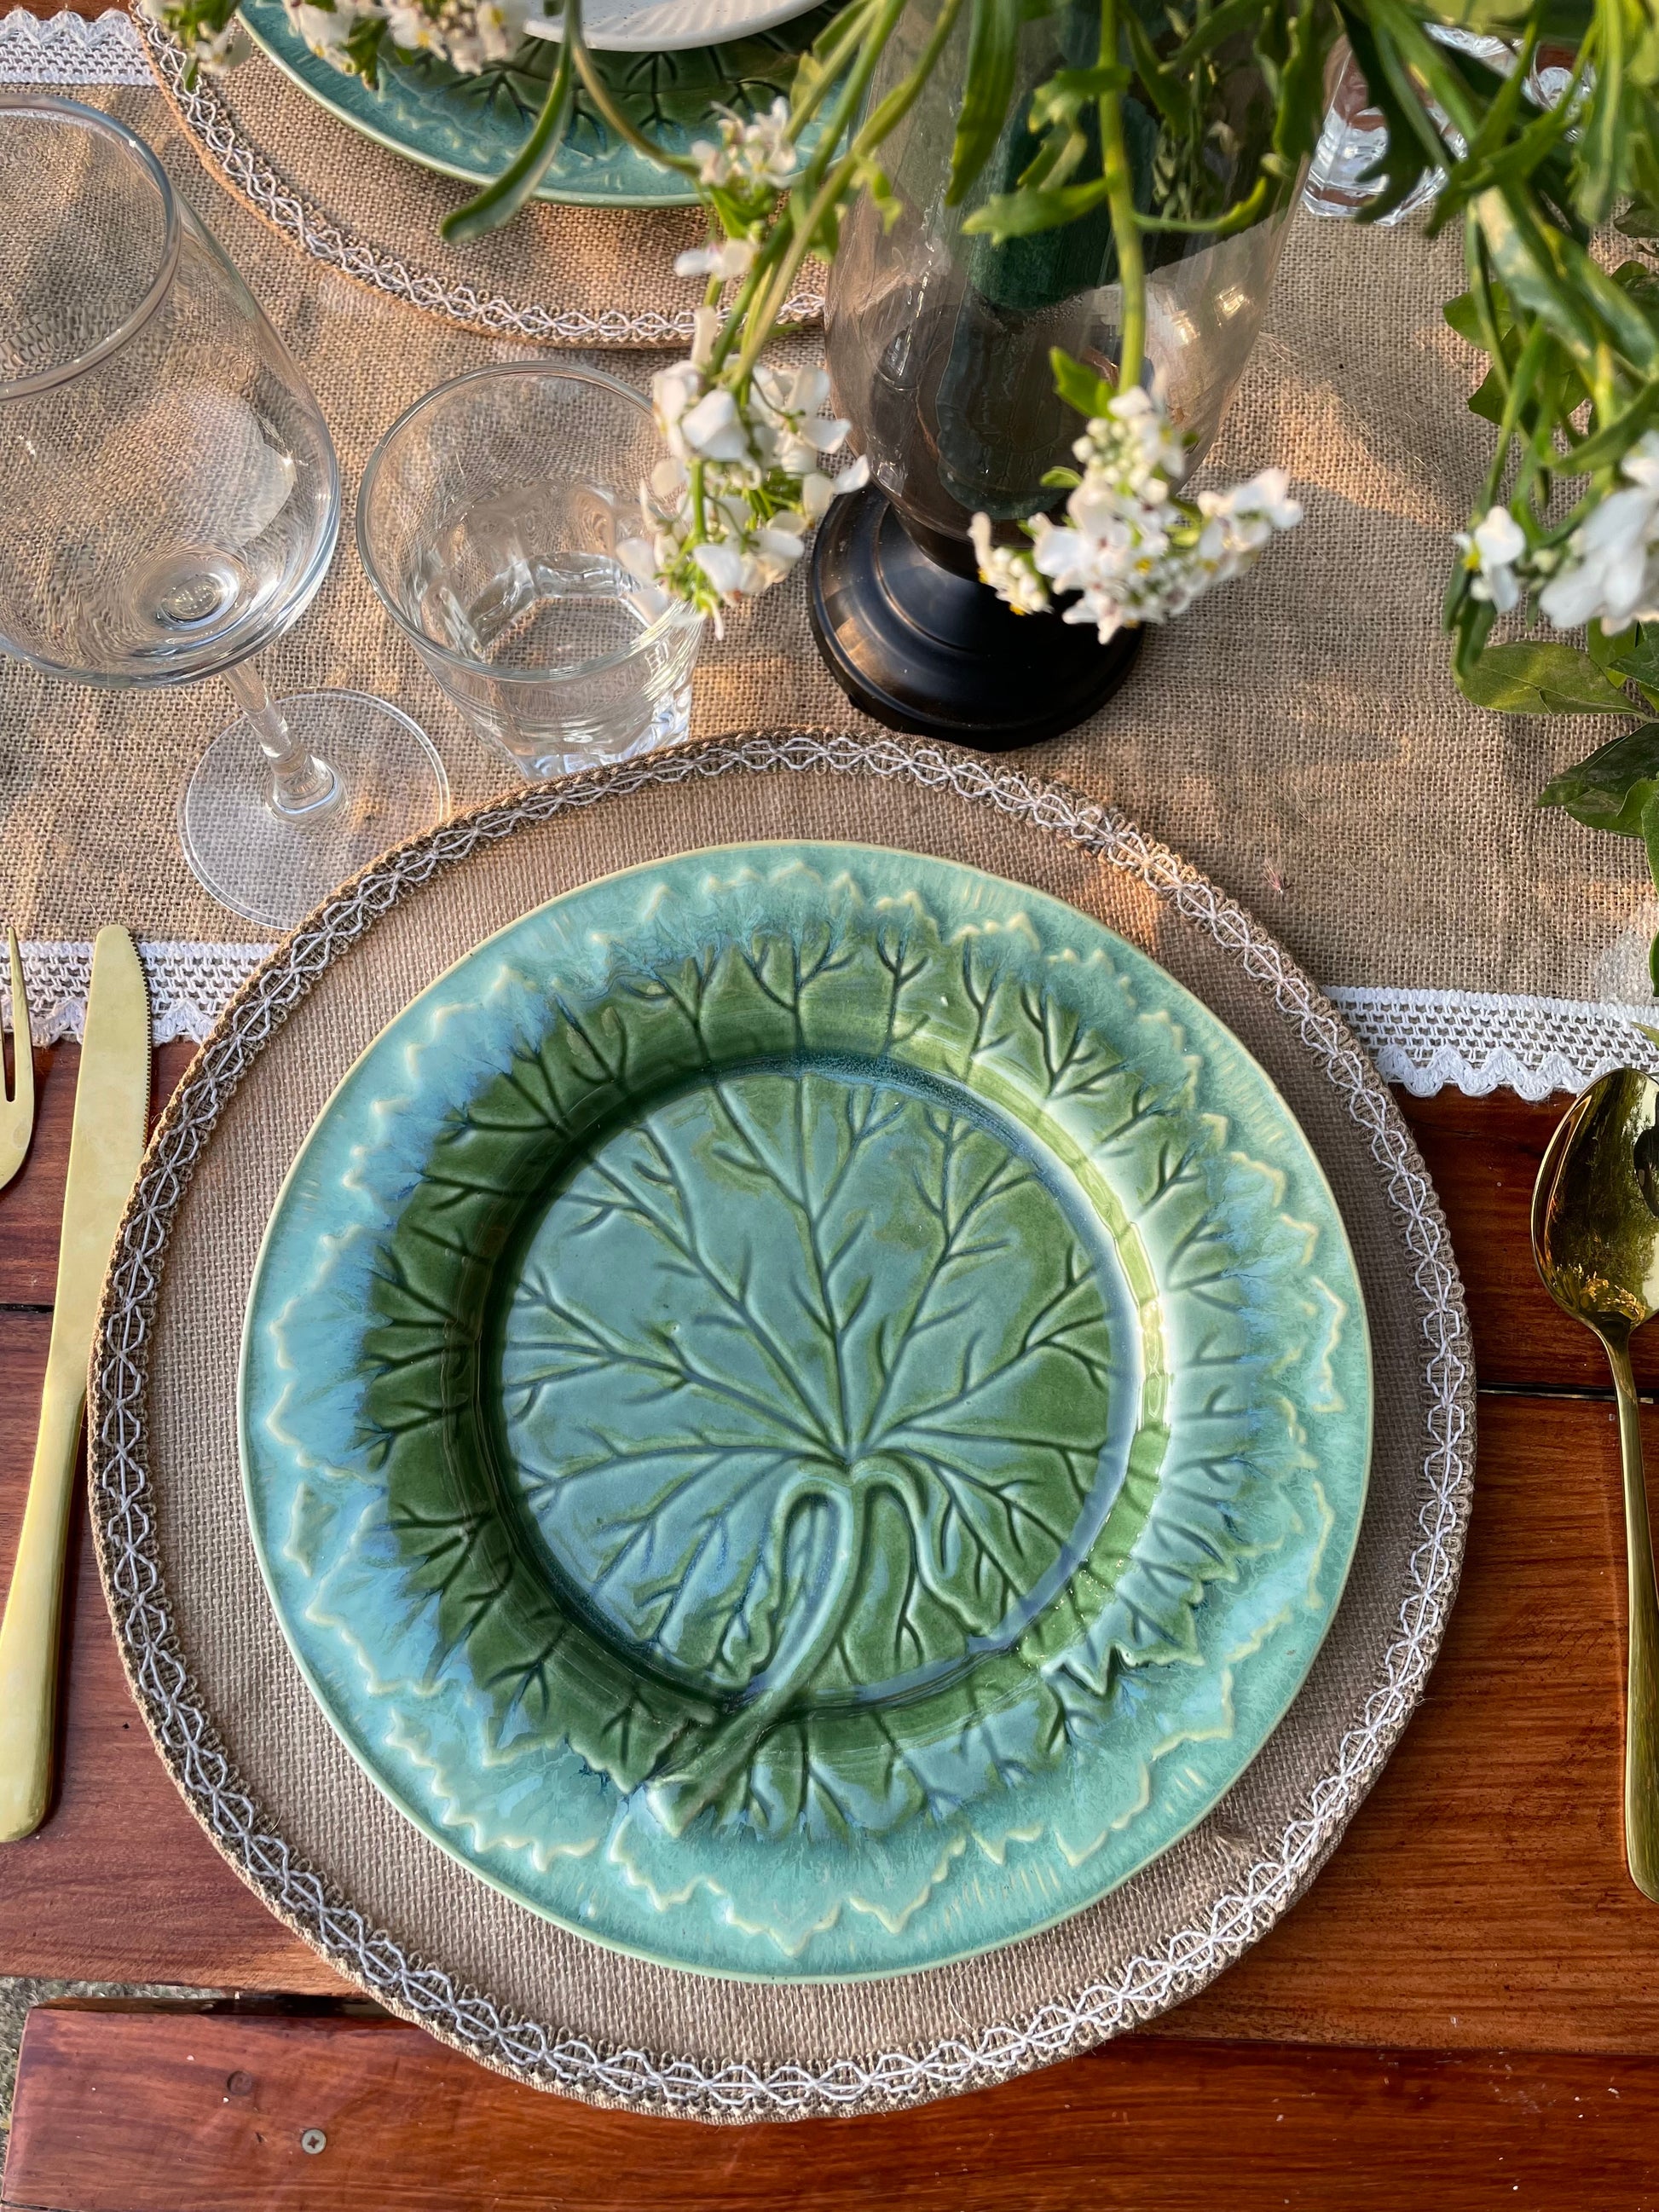 parna stoneware designer leaf charger plate tesu gree and white dining styling dinner setup resort cafe restaurant villa